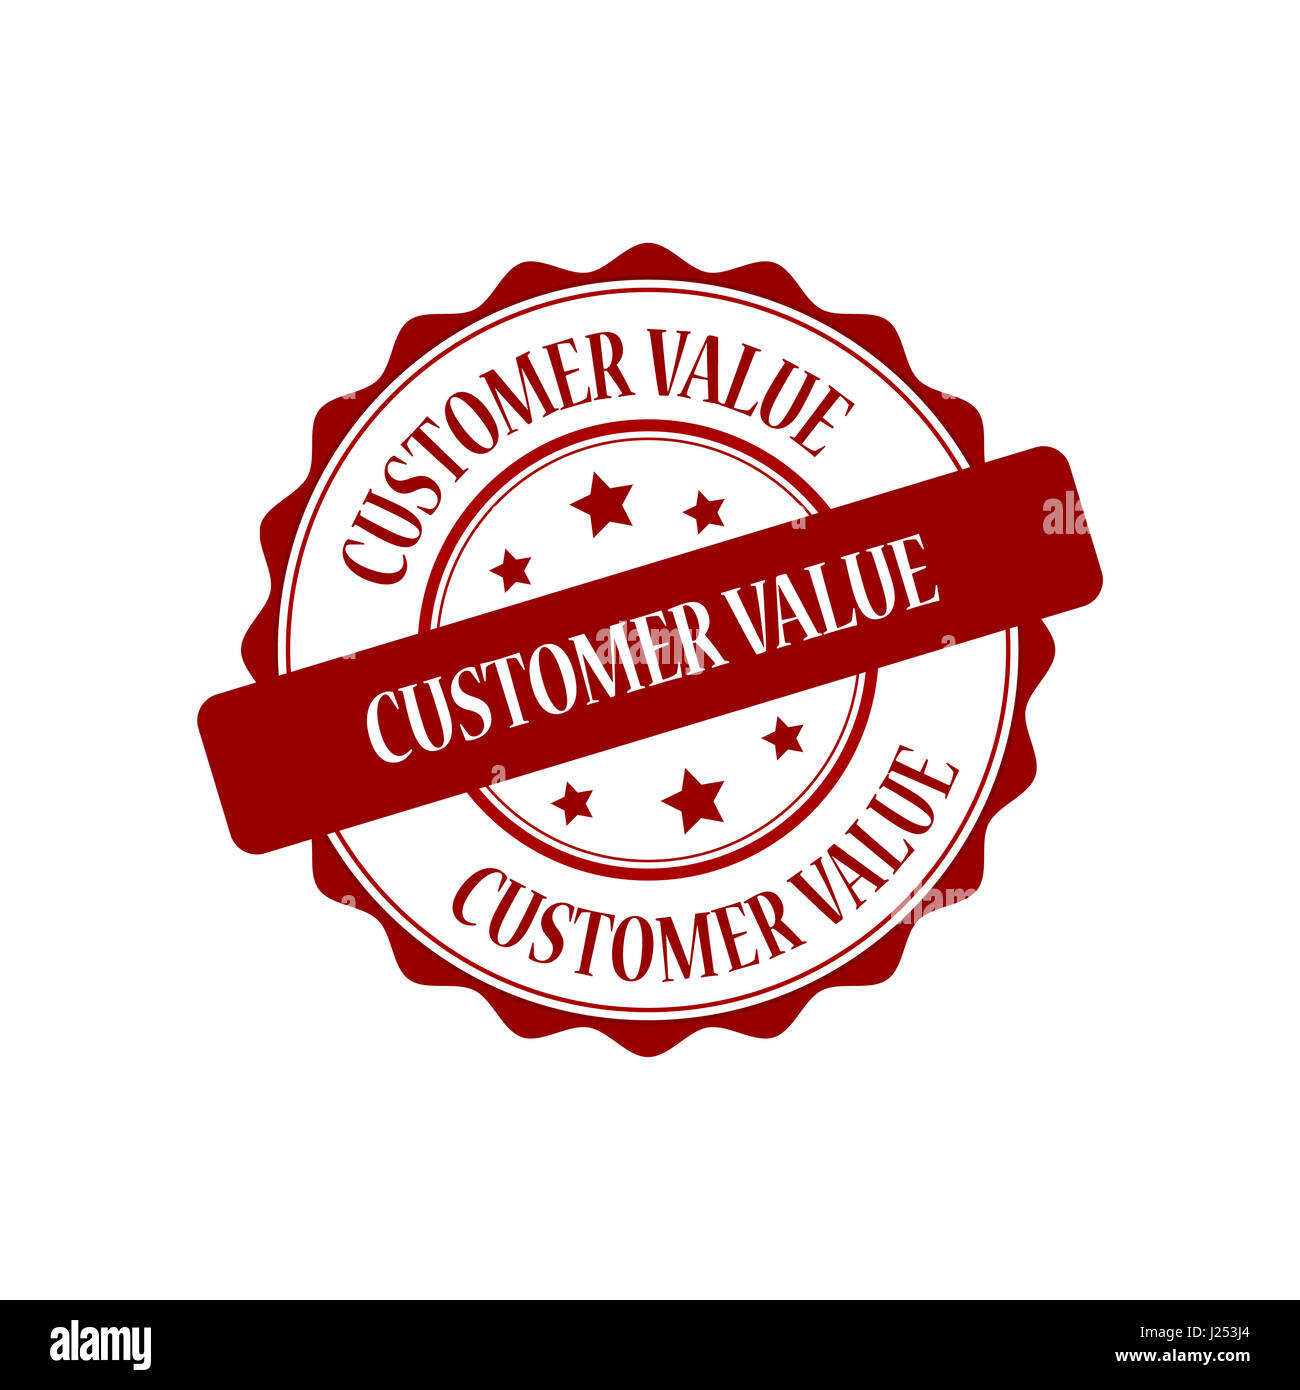 Customer value stamp illustration Stock Photo